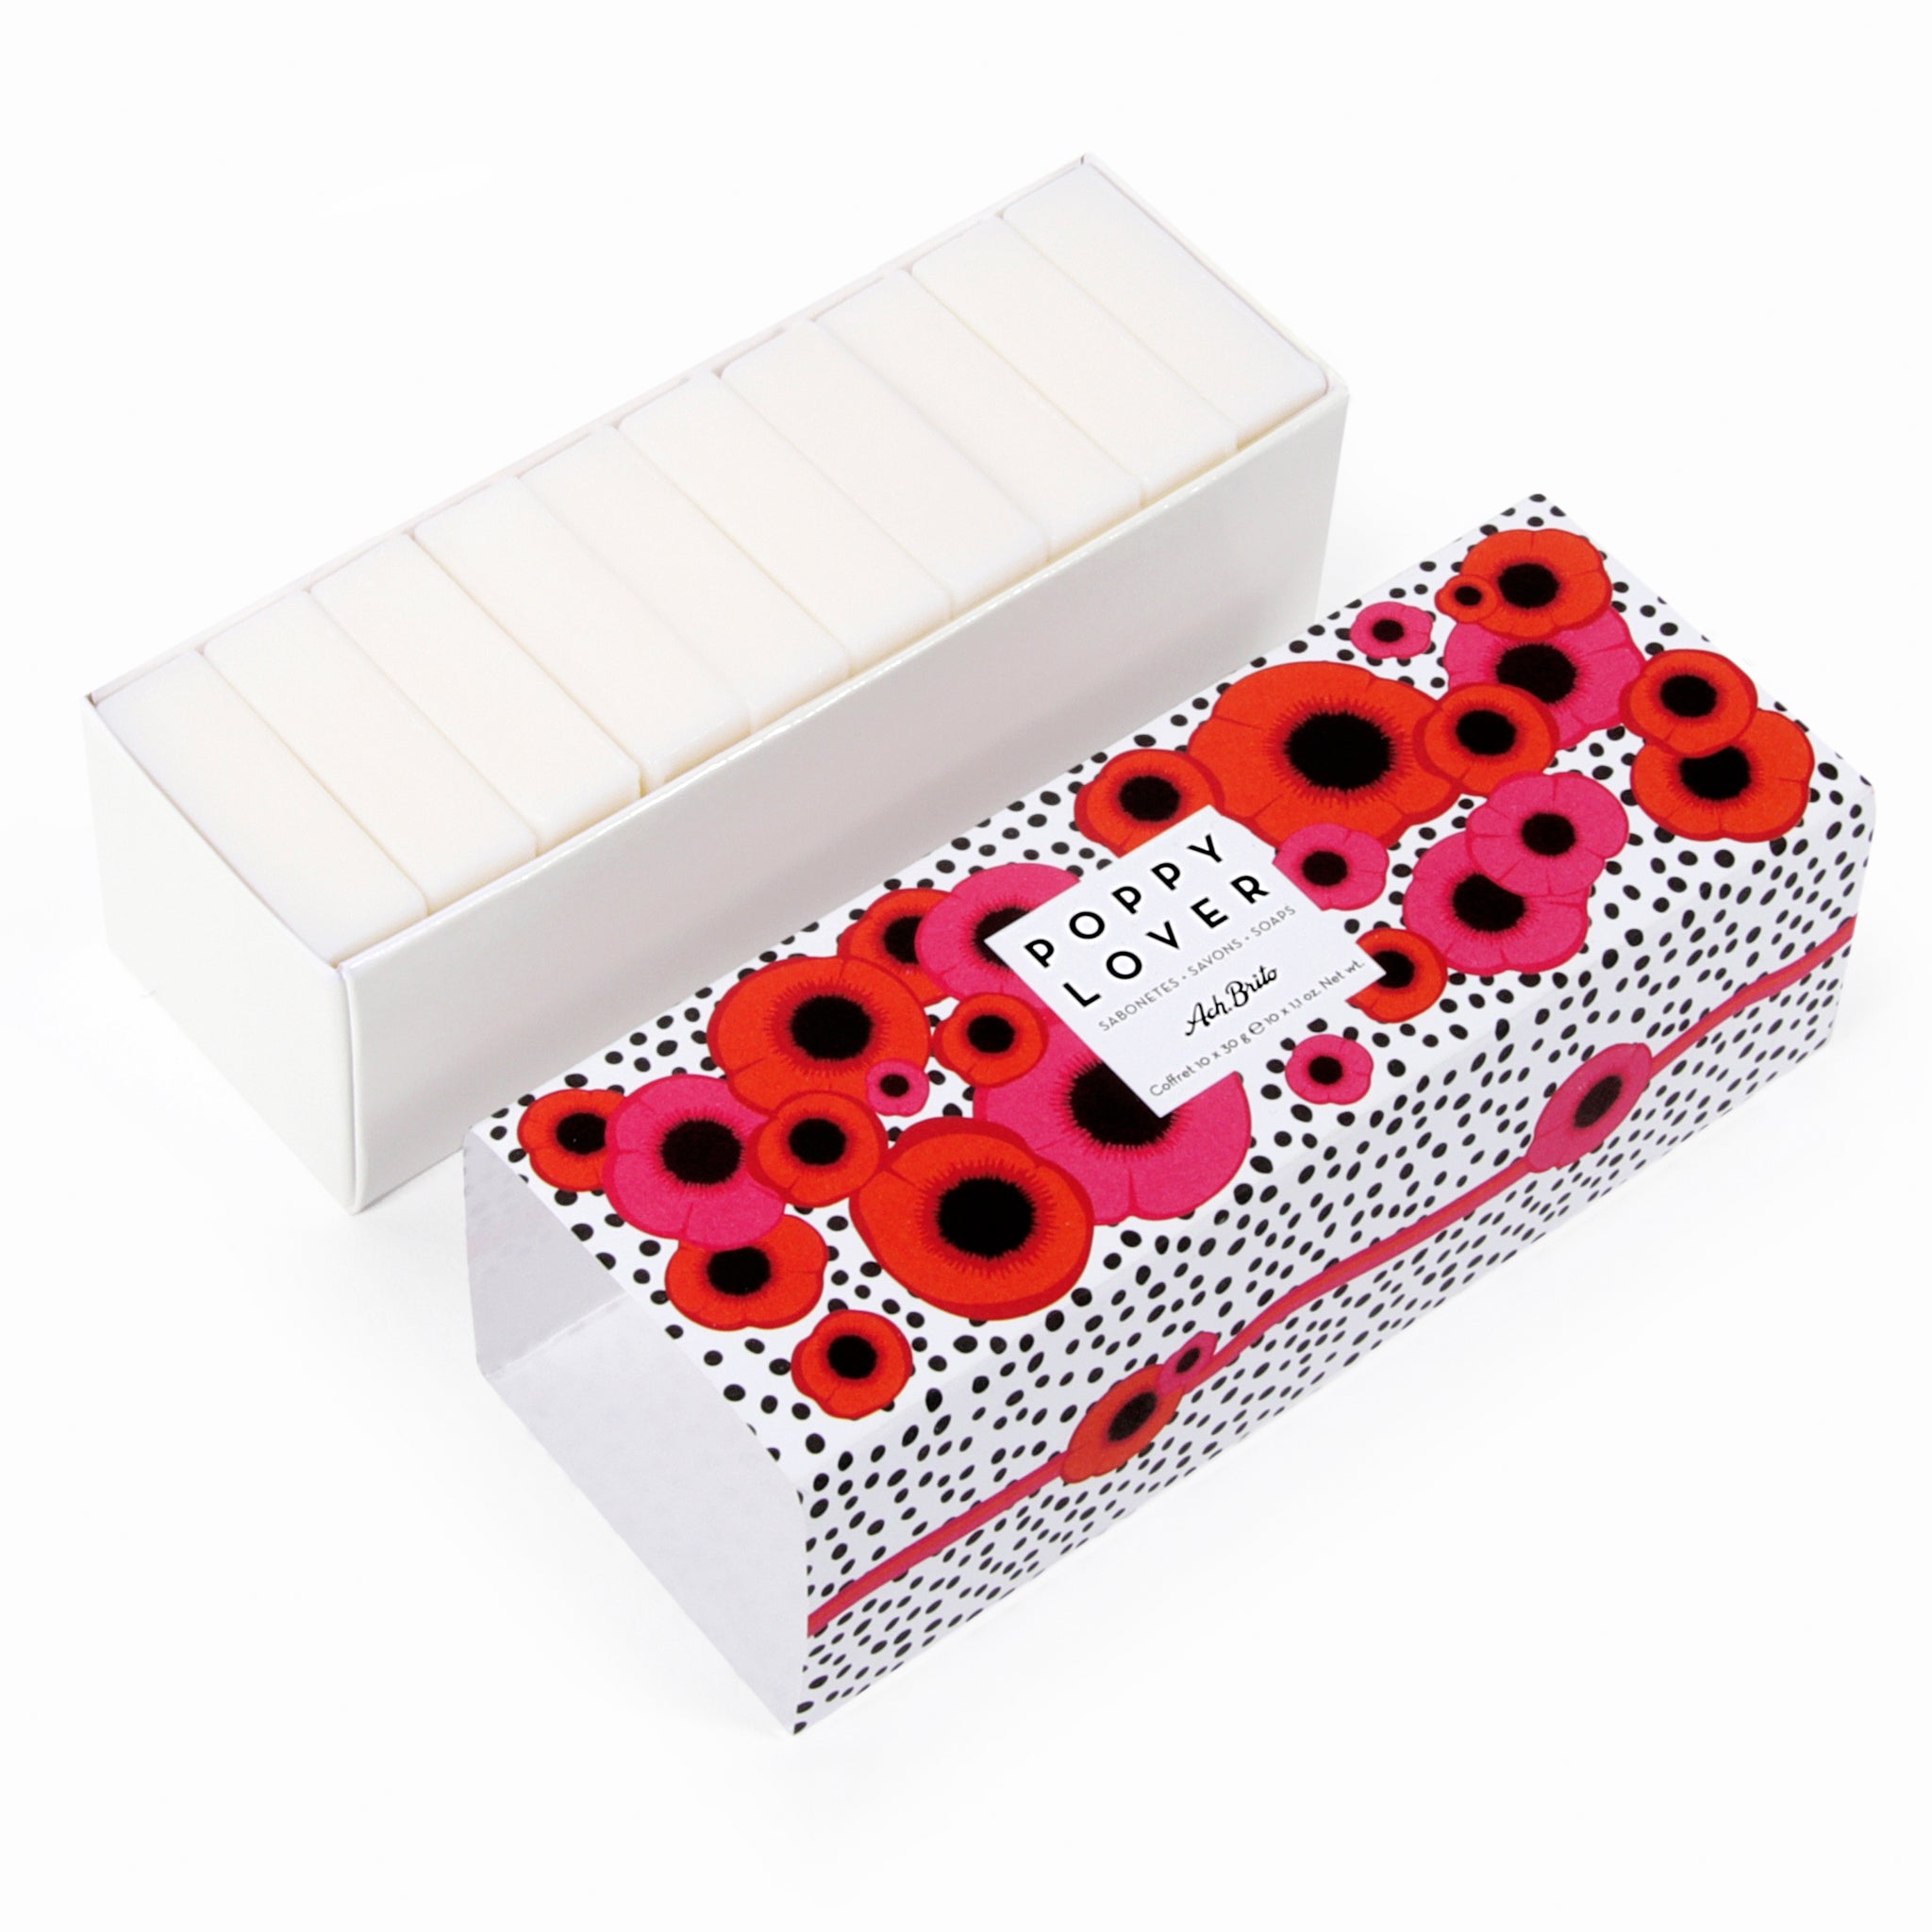 ACH BRITO POPPY LOVER SOAPS GIFT BOX 10X30g BY ACH BRITO - MeMeMe Gifts